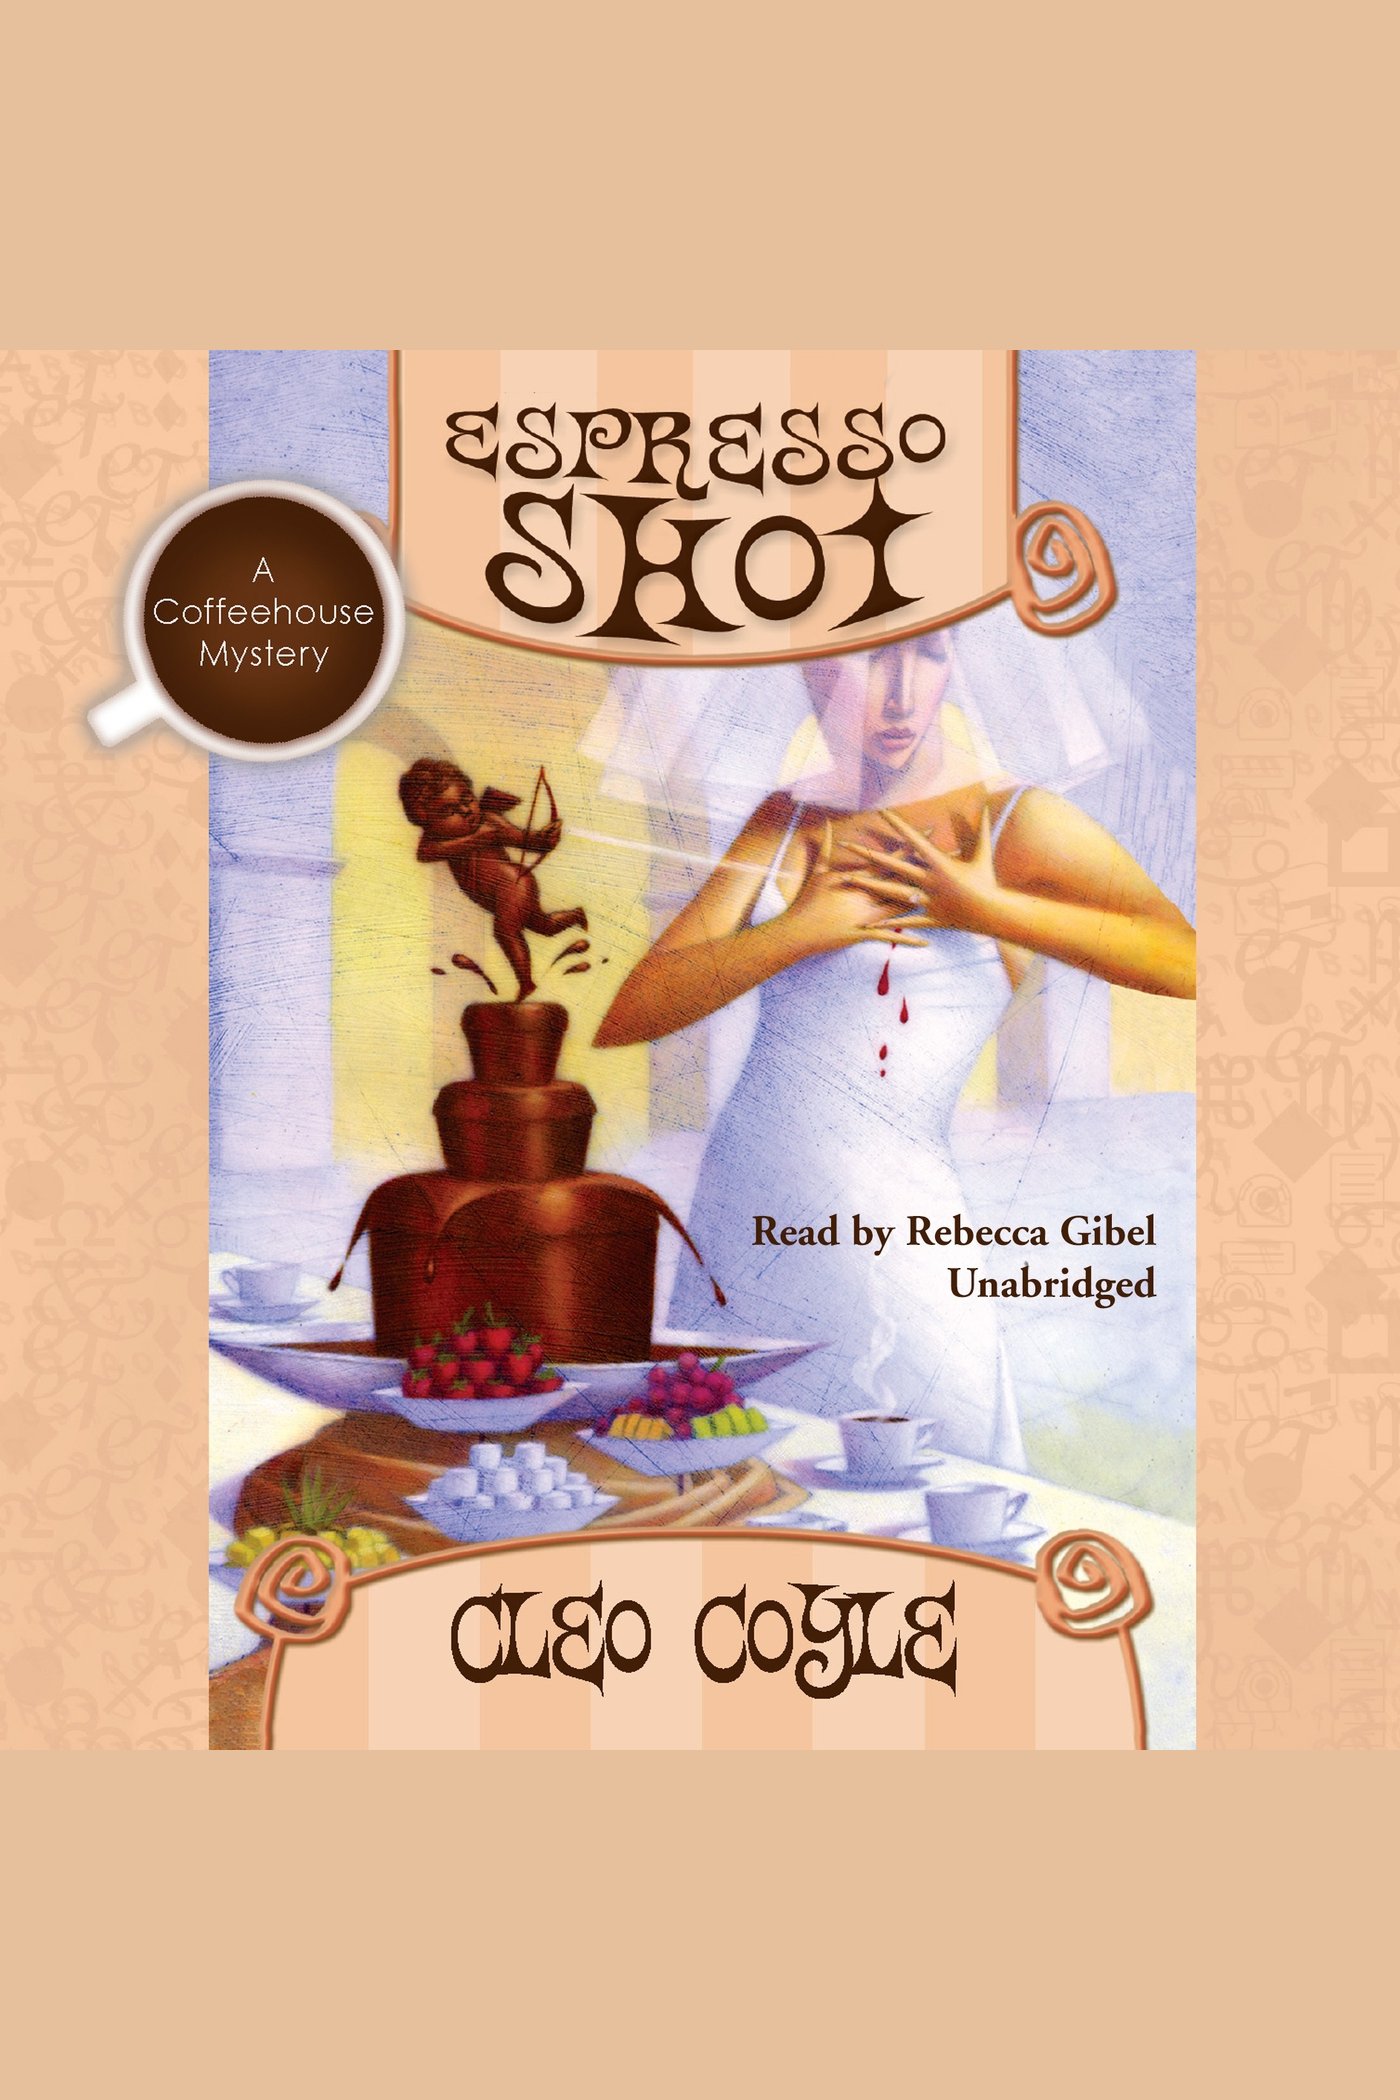 Umschlagbild für Espresso Shot [electronic resource] : A Coffeehouse Mystery